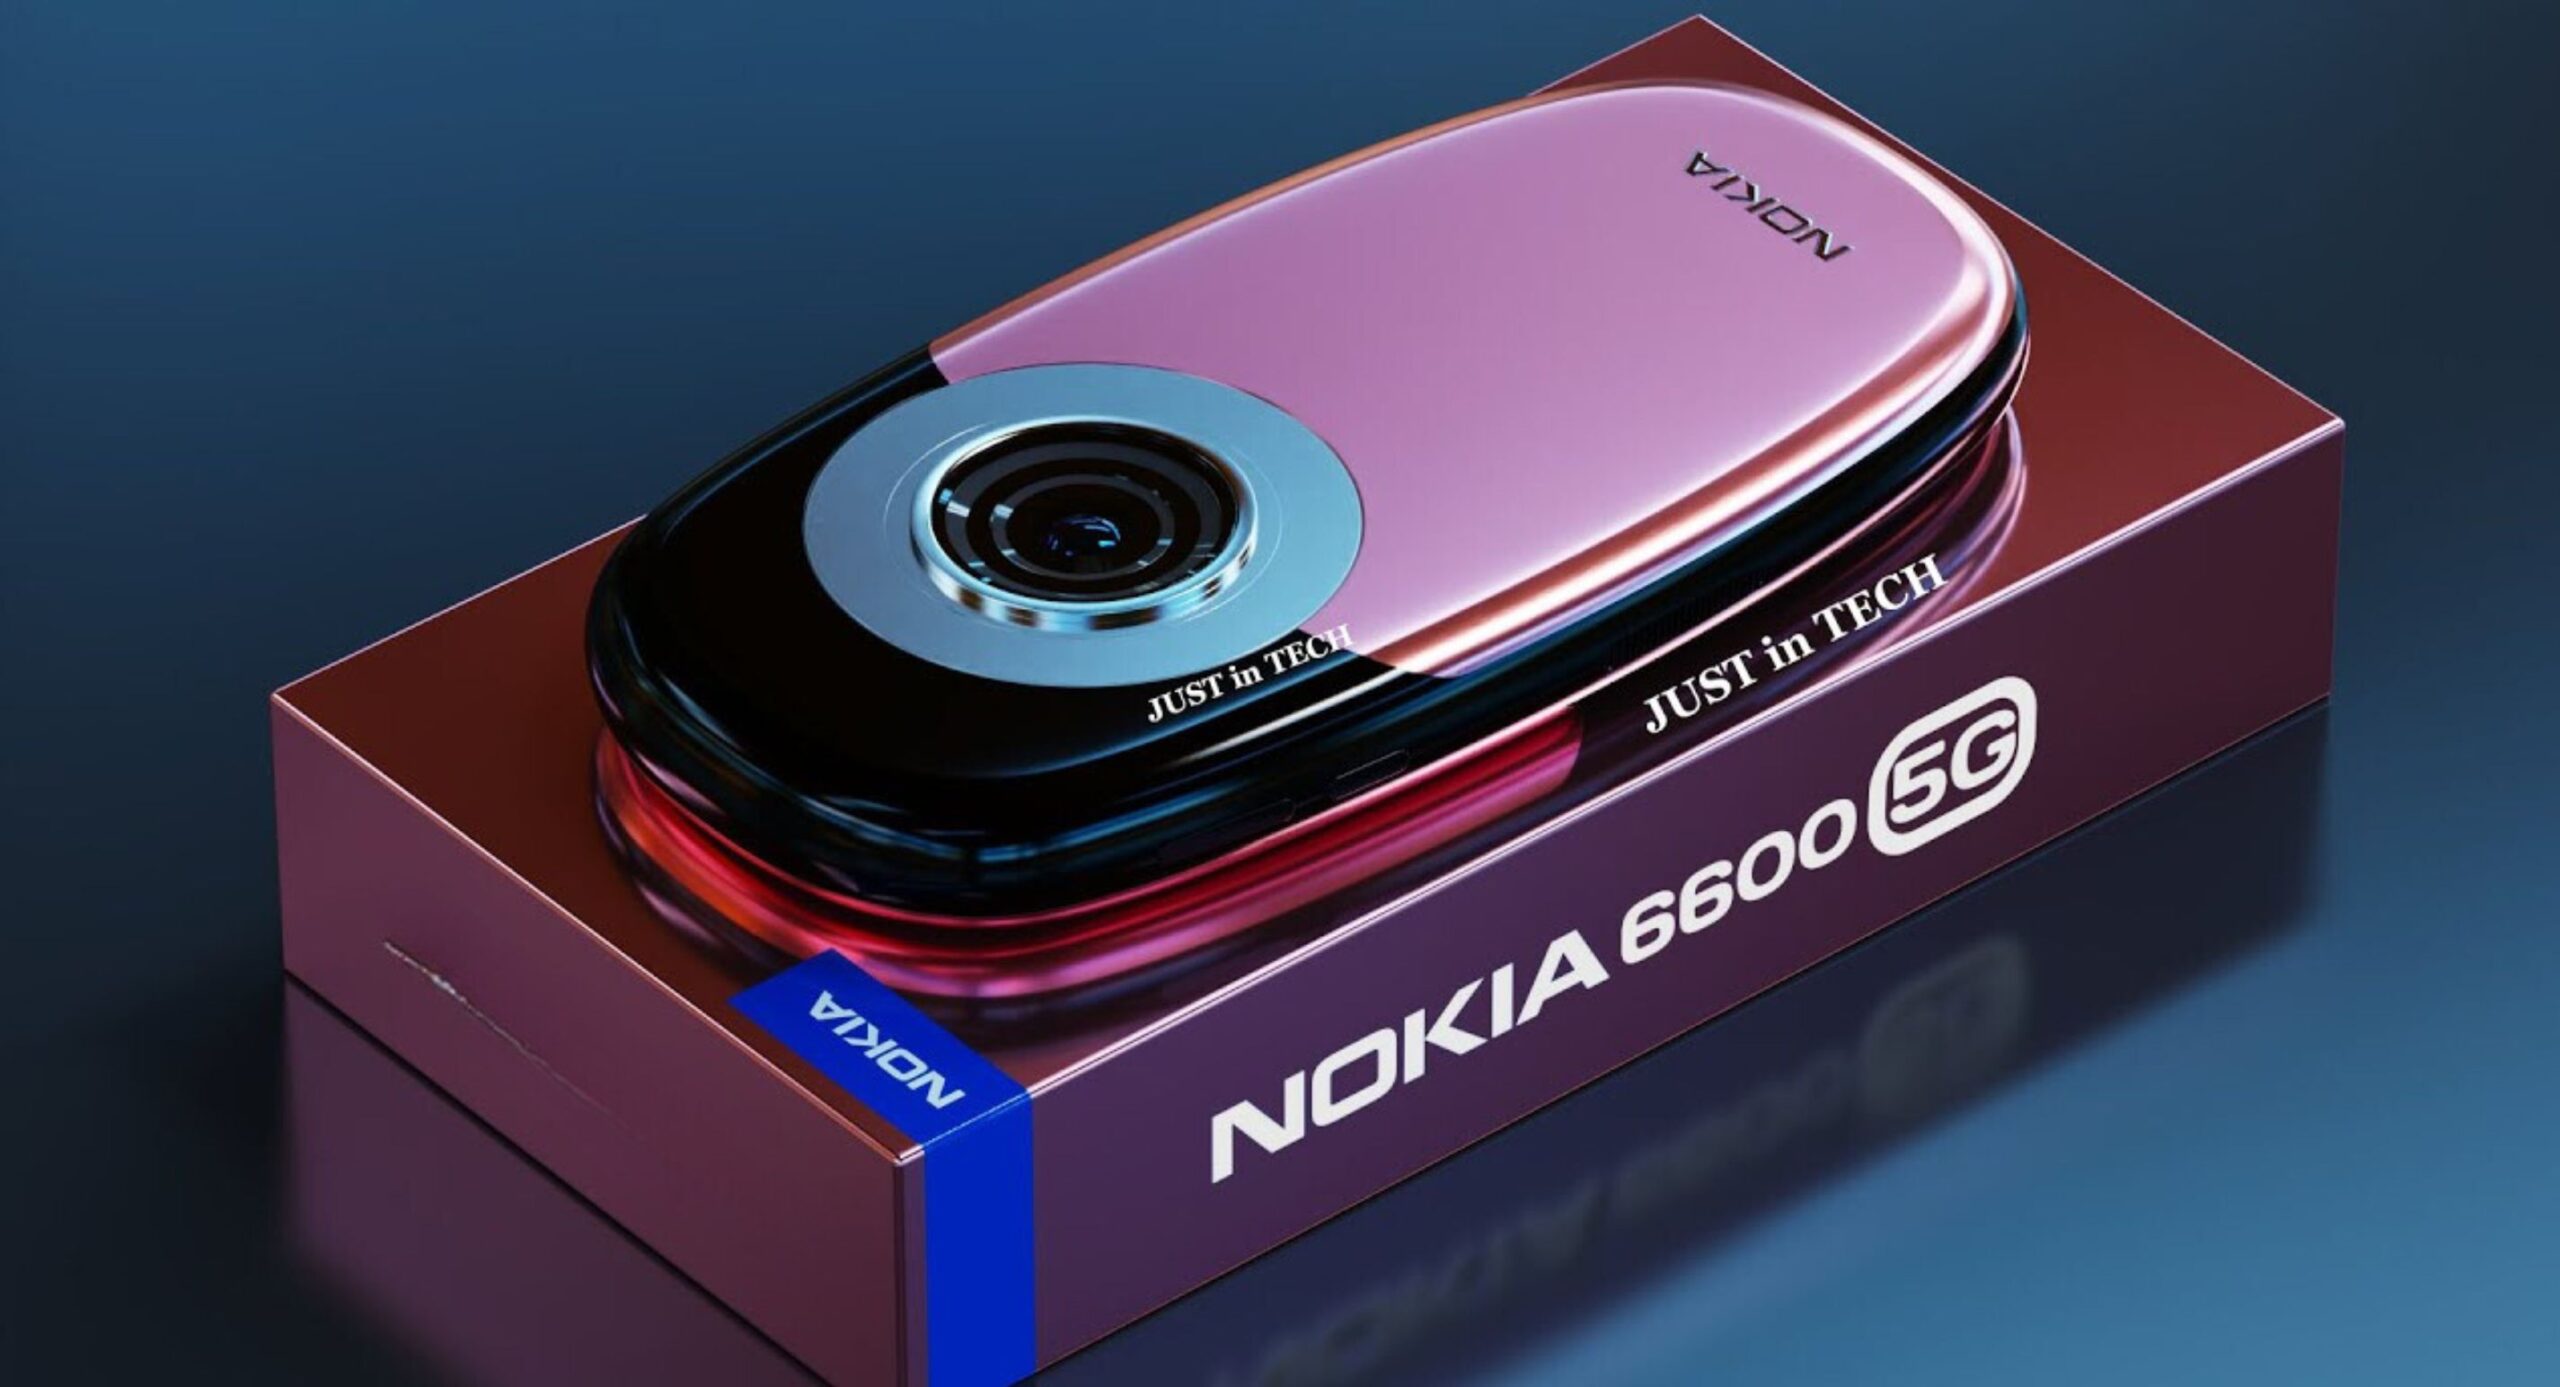 Nokia 6600 New Smartphone